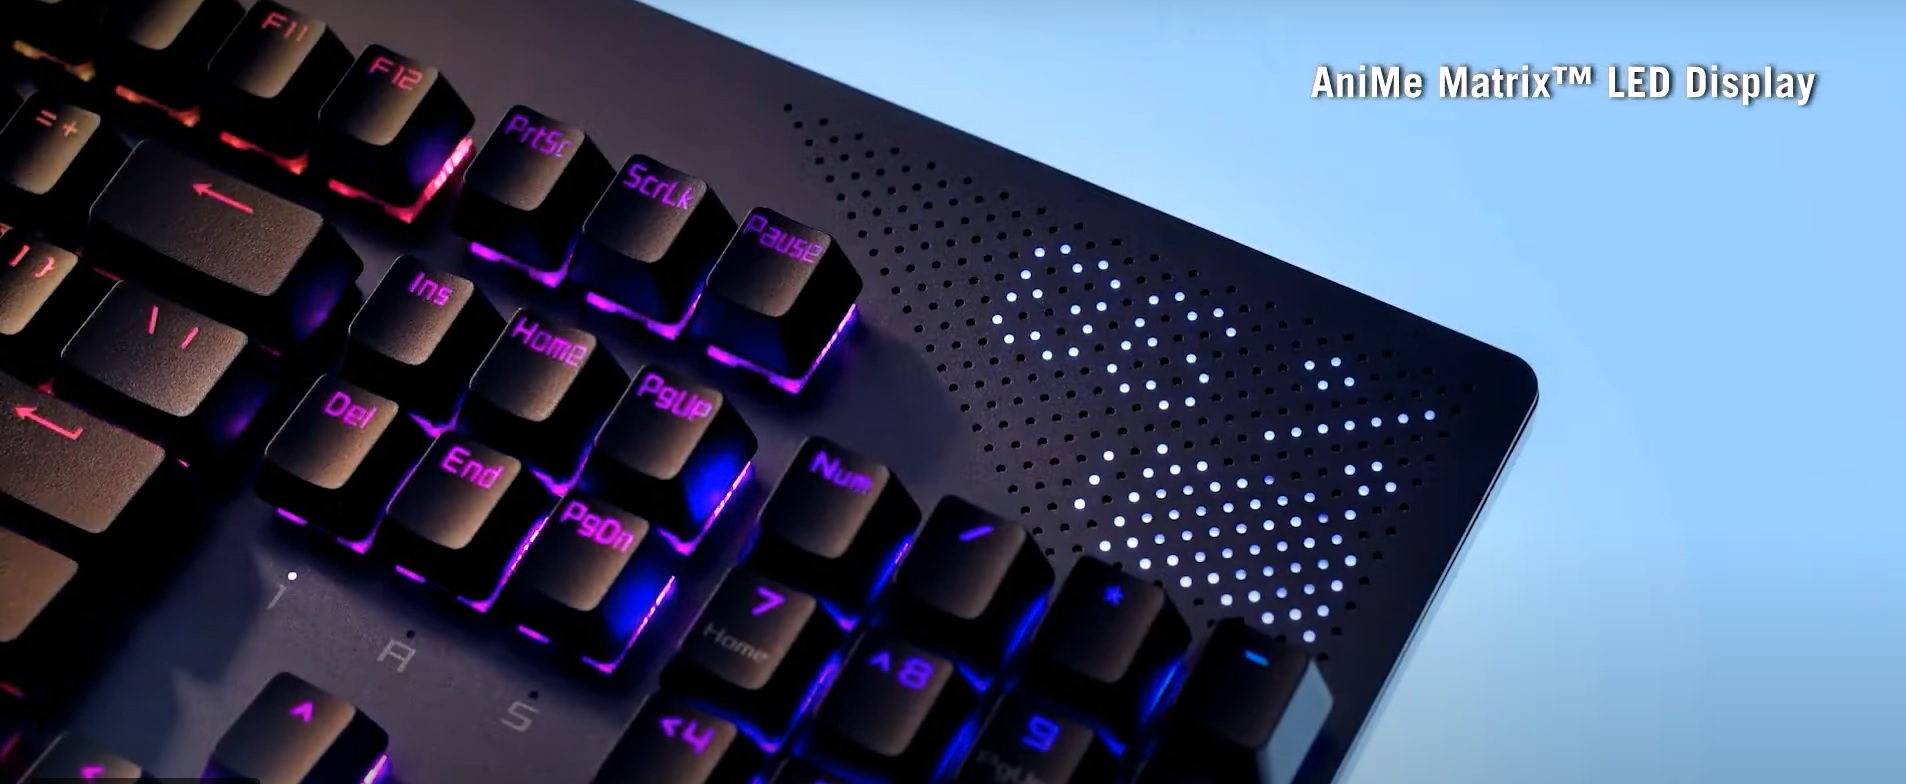 Asus' keyboard uses mini LEDs to display animations Ars